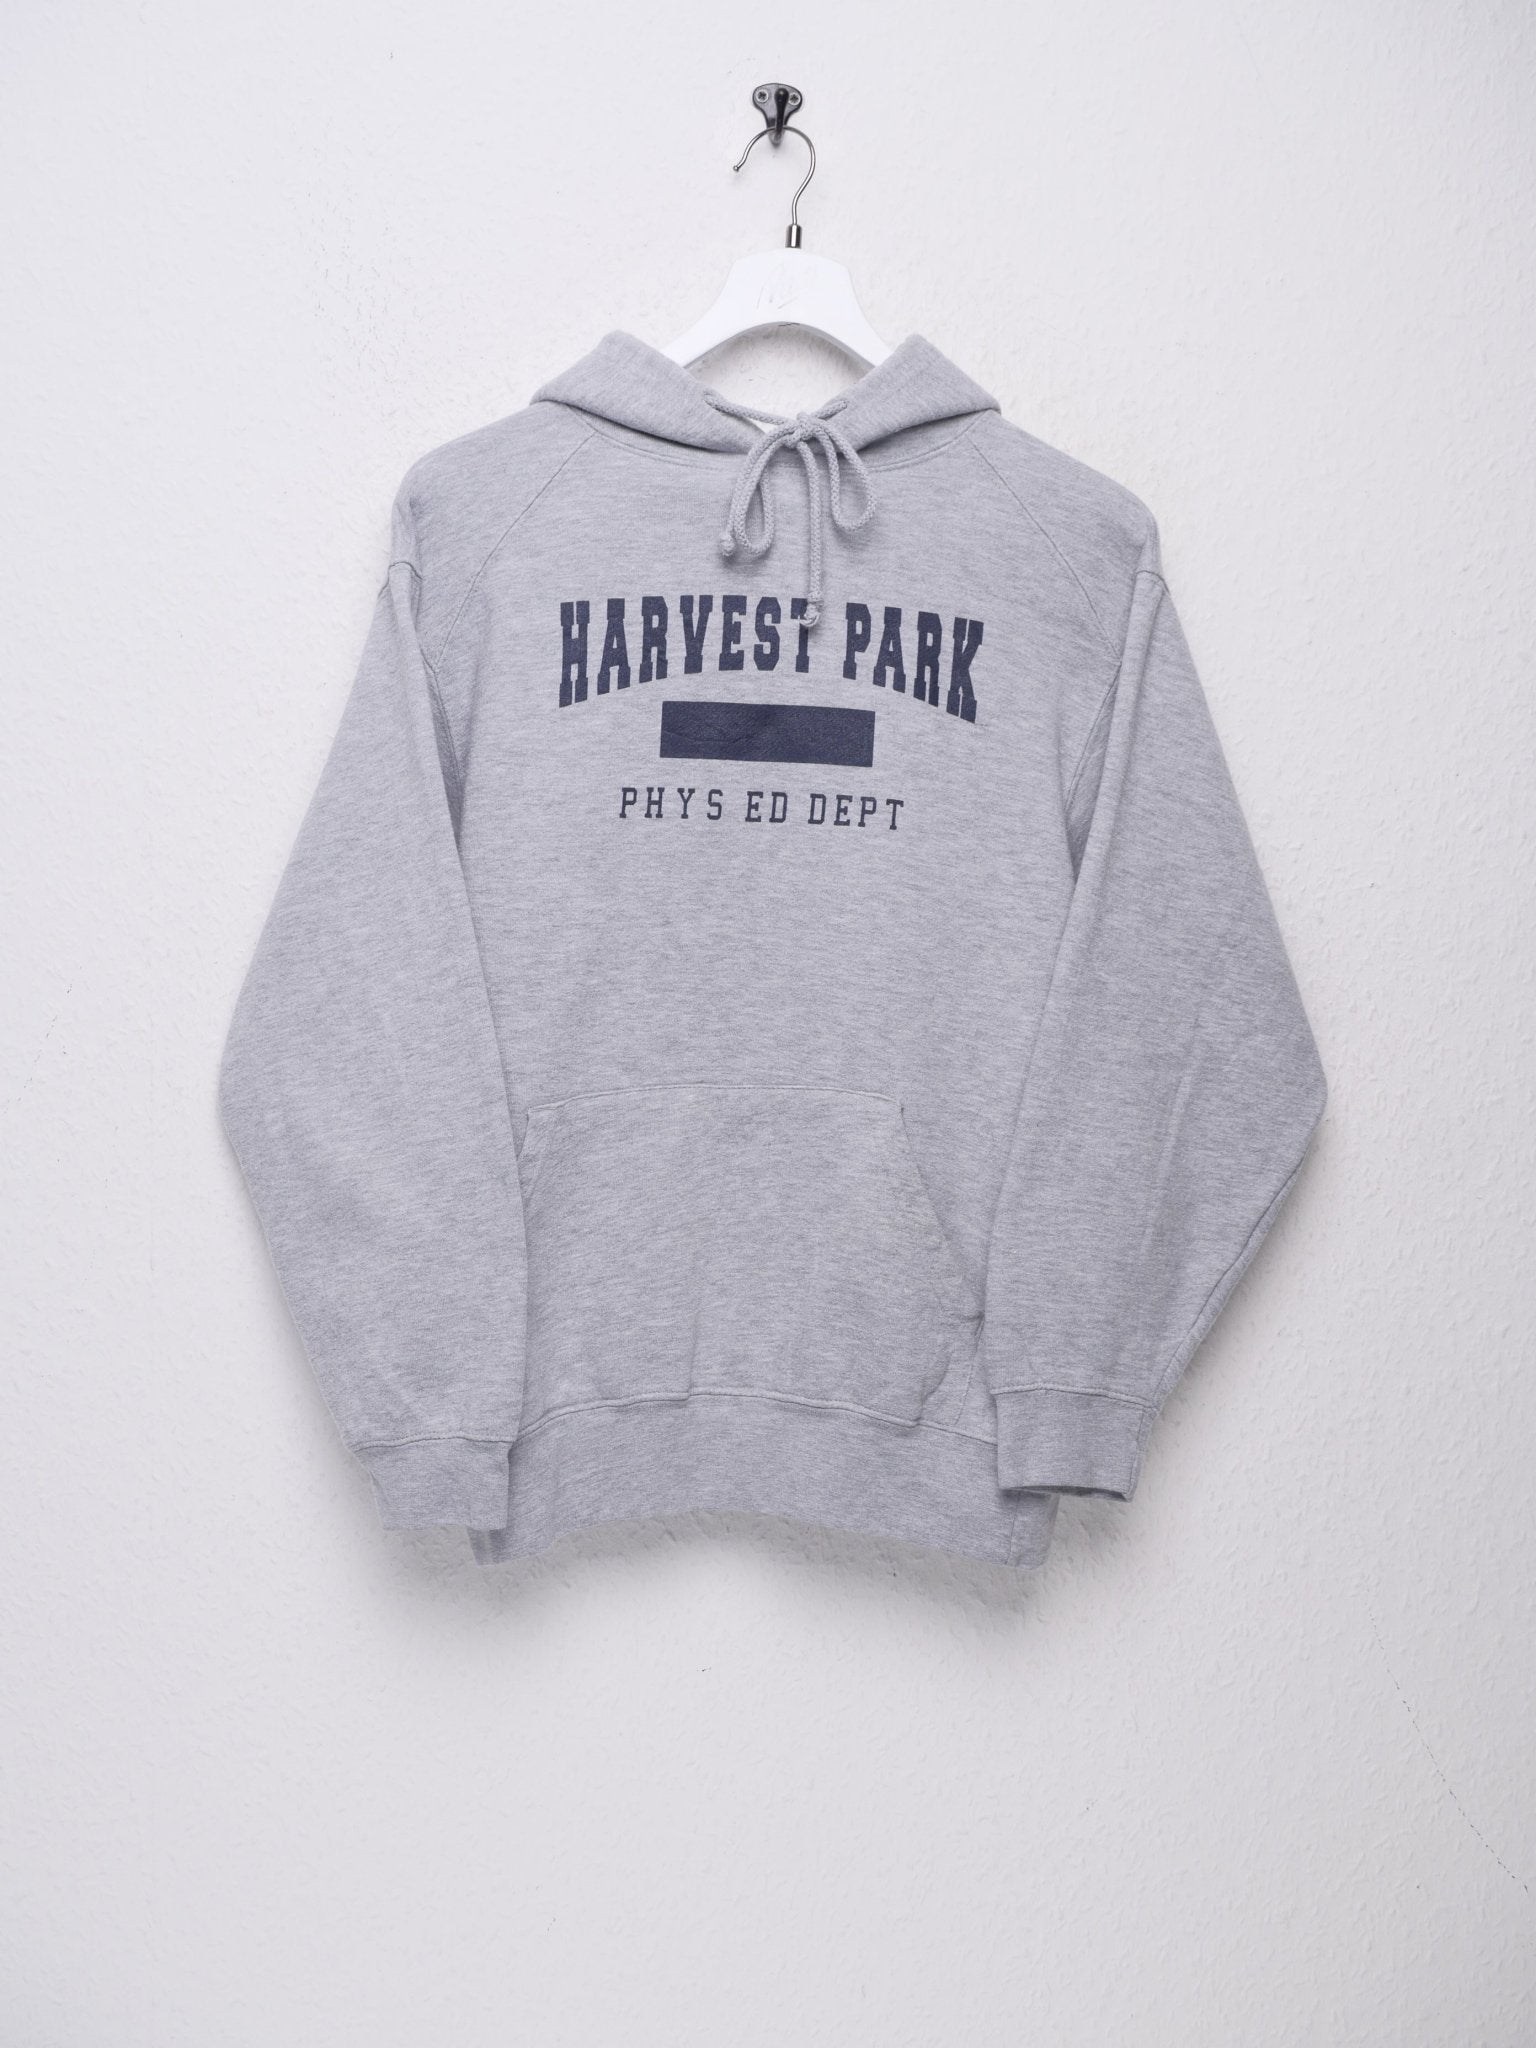 Harvest Park printed grey Swetaer - Peeces